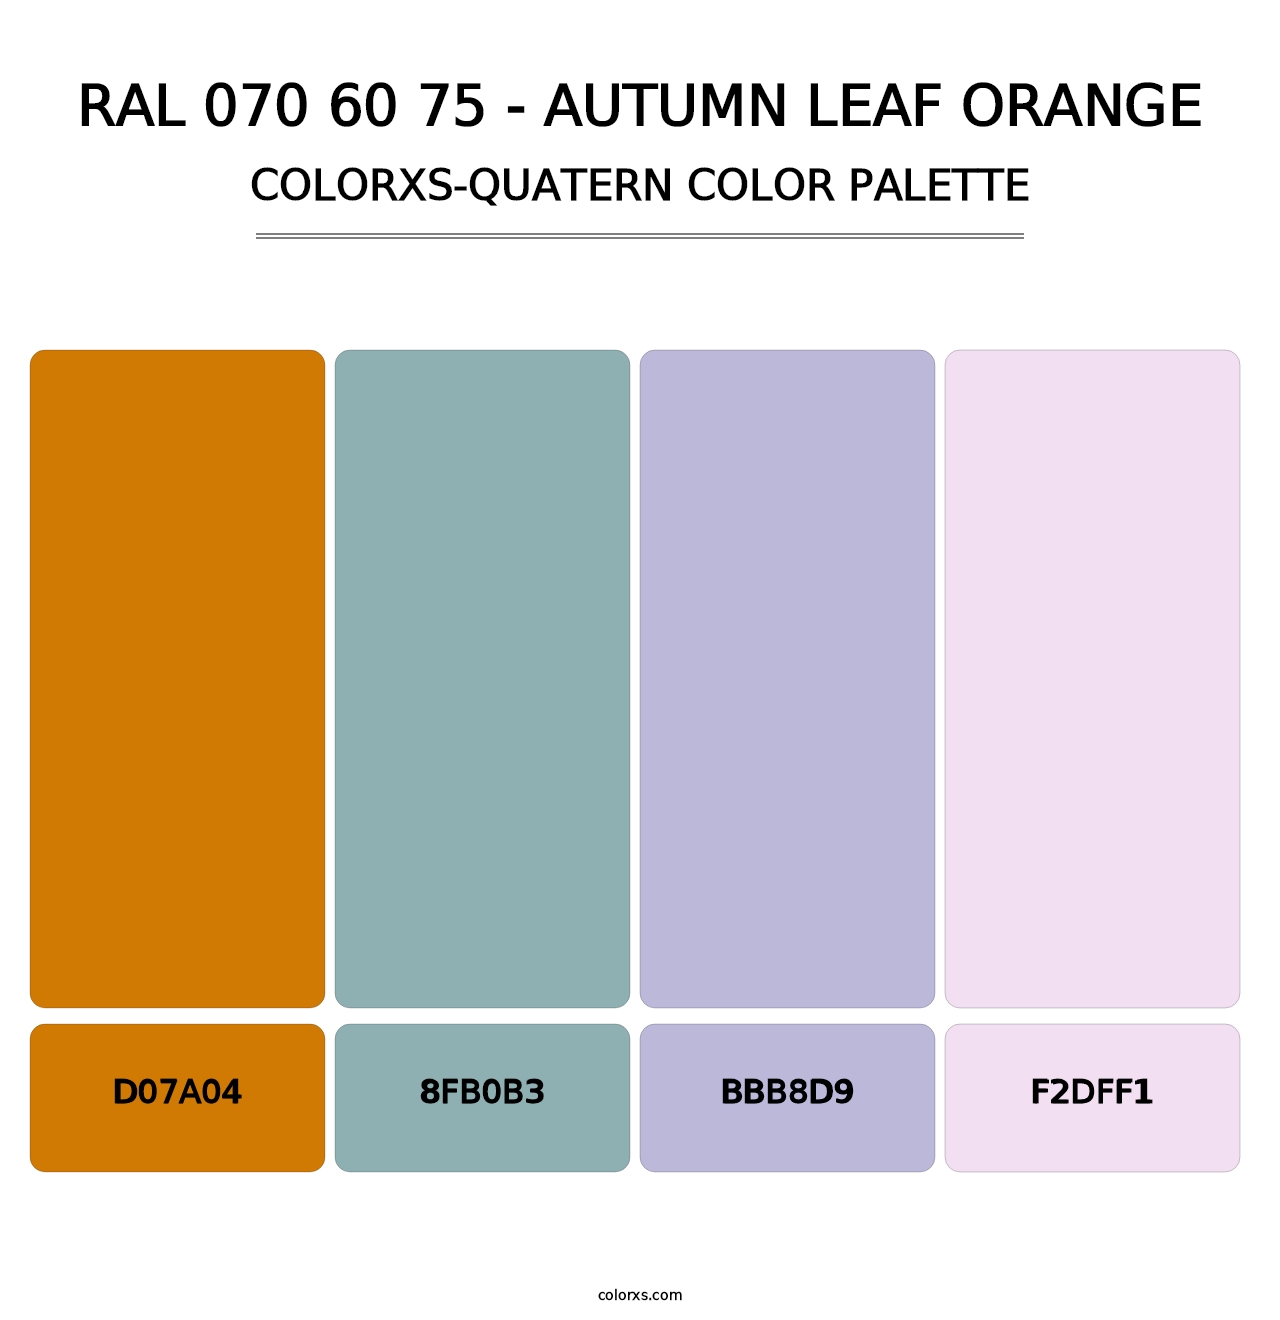 RAL 070 60 75 - Autumn Leaf Orange - Colorxs Quatern Palette